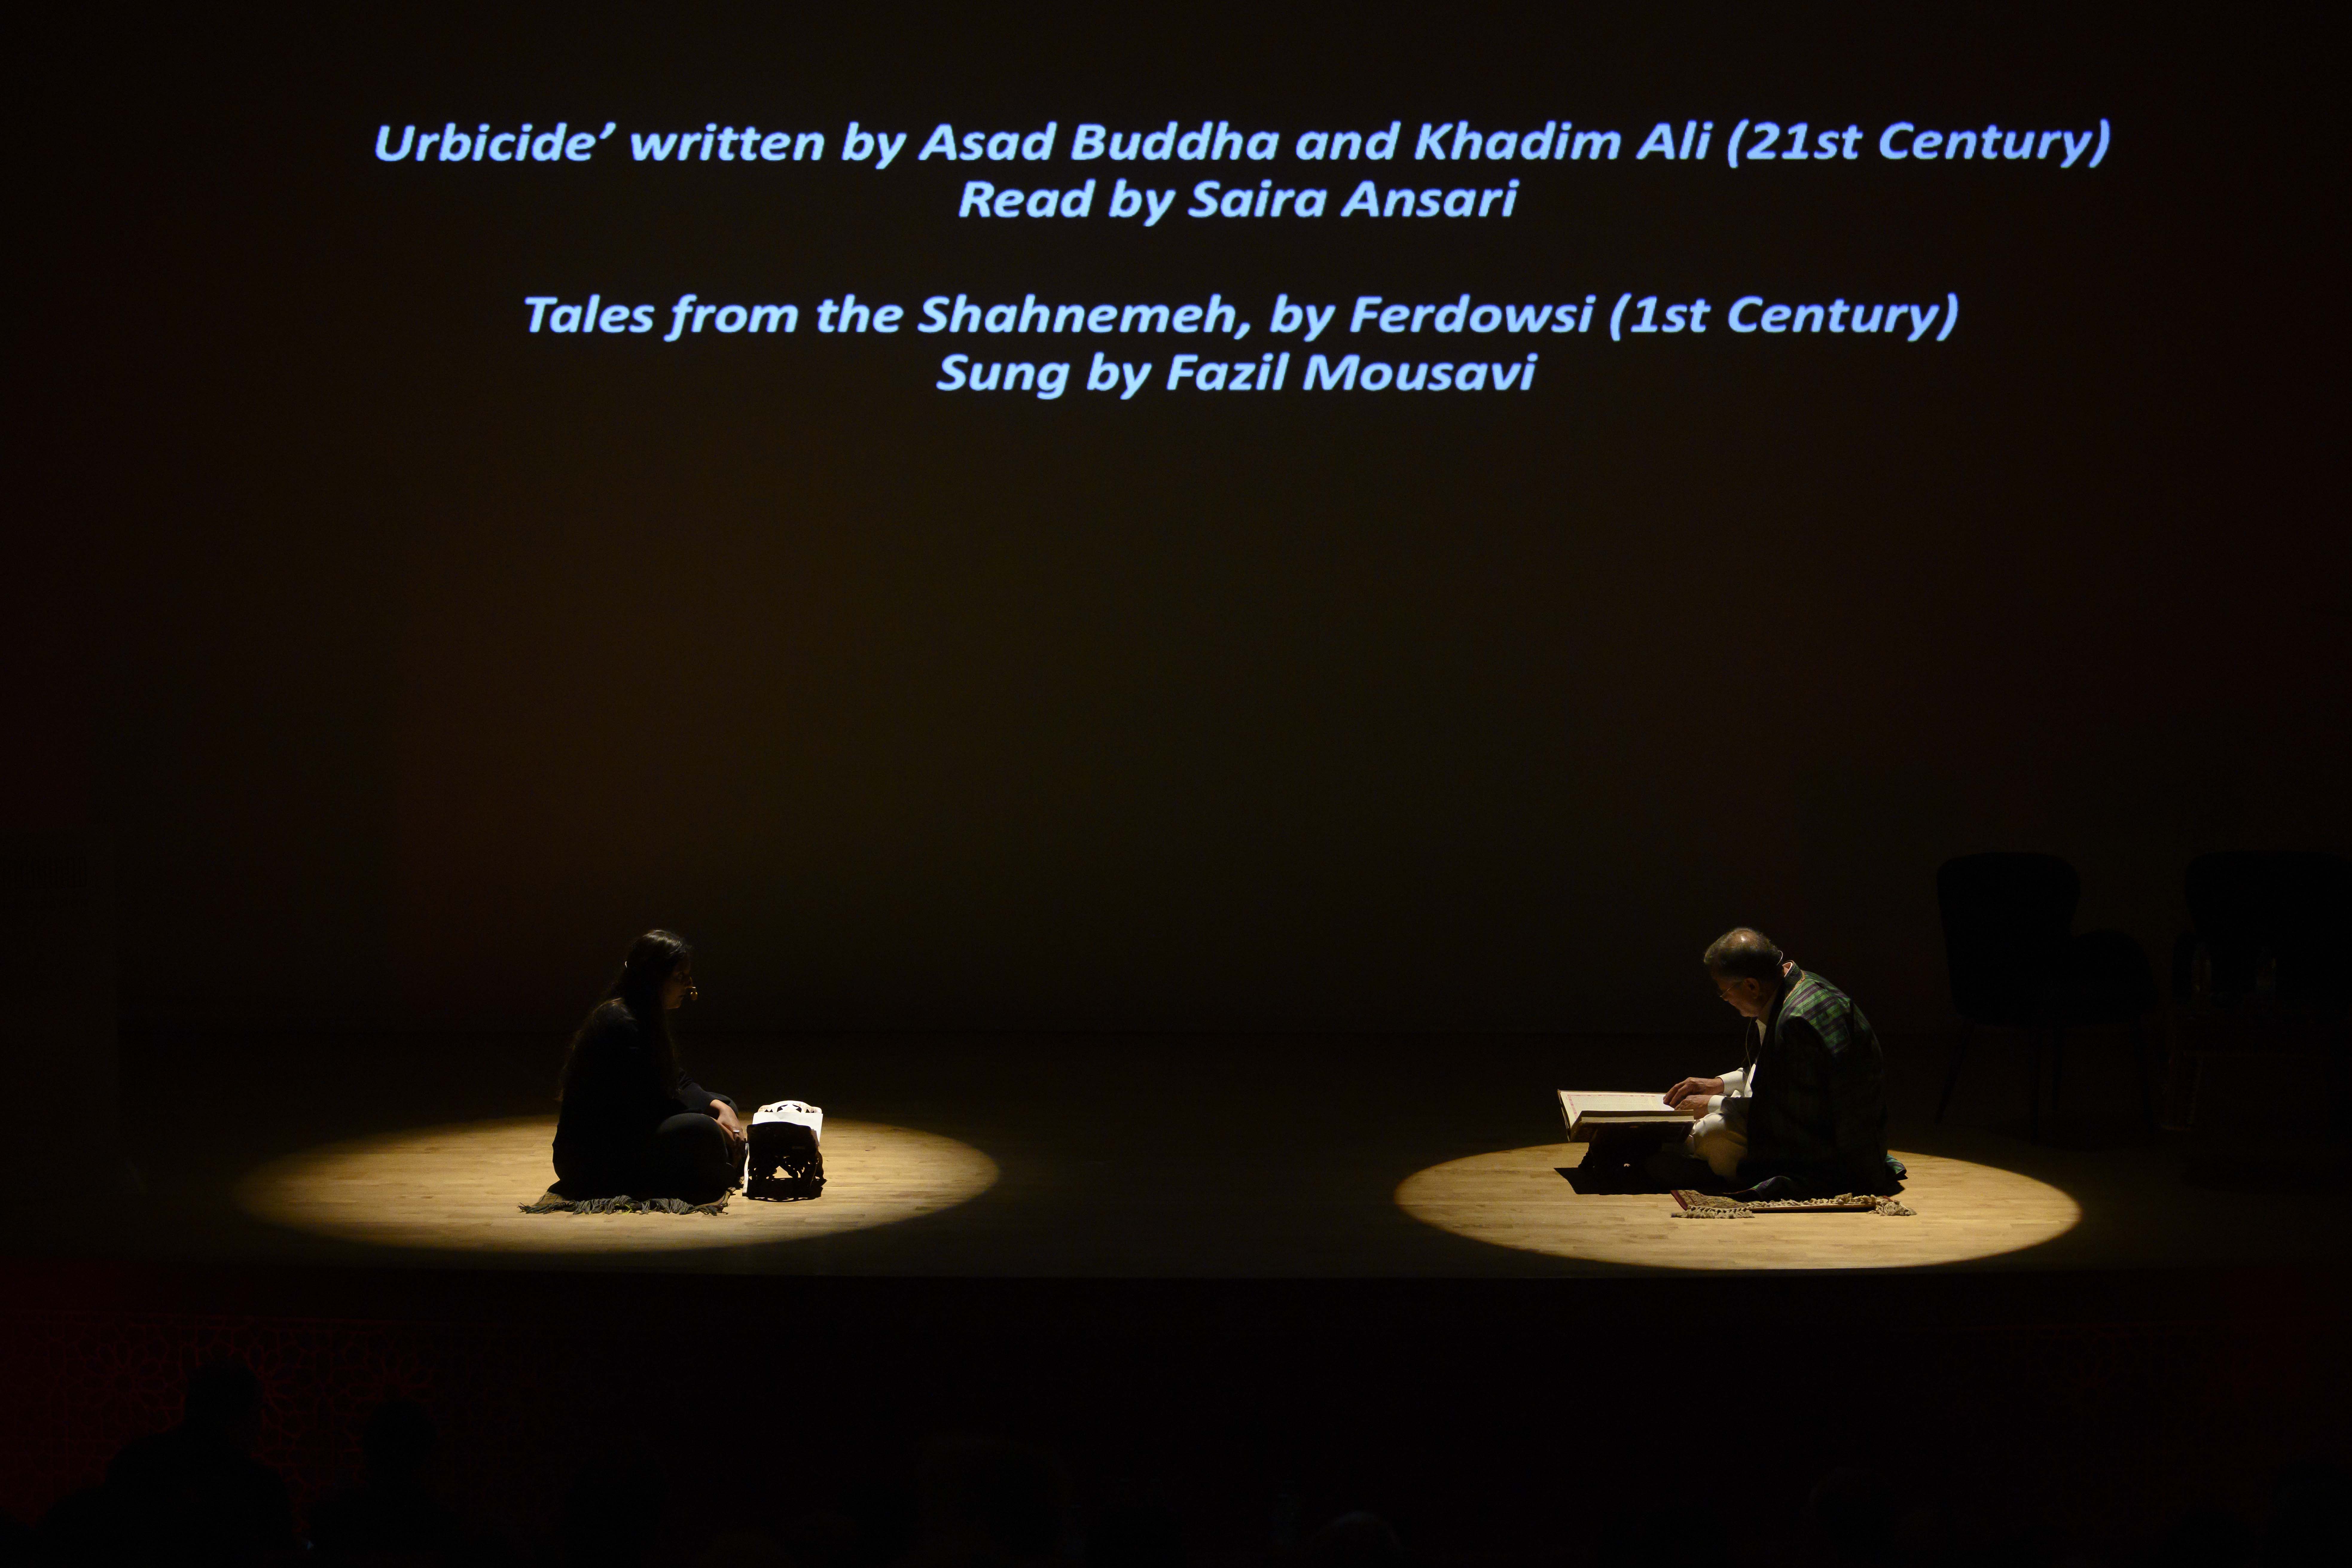 Performance by Fazil H. Mousavi